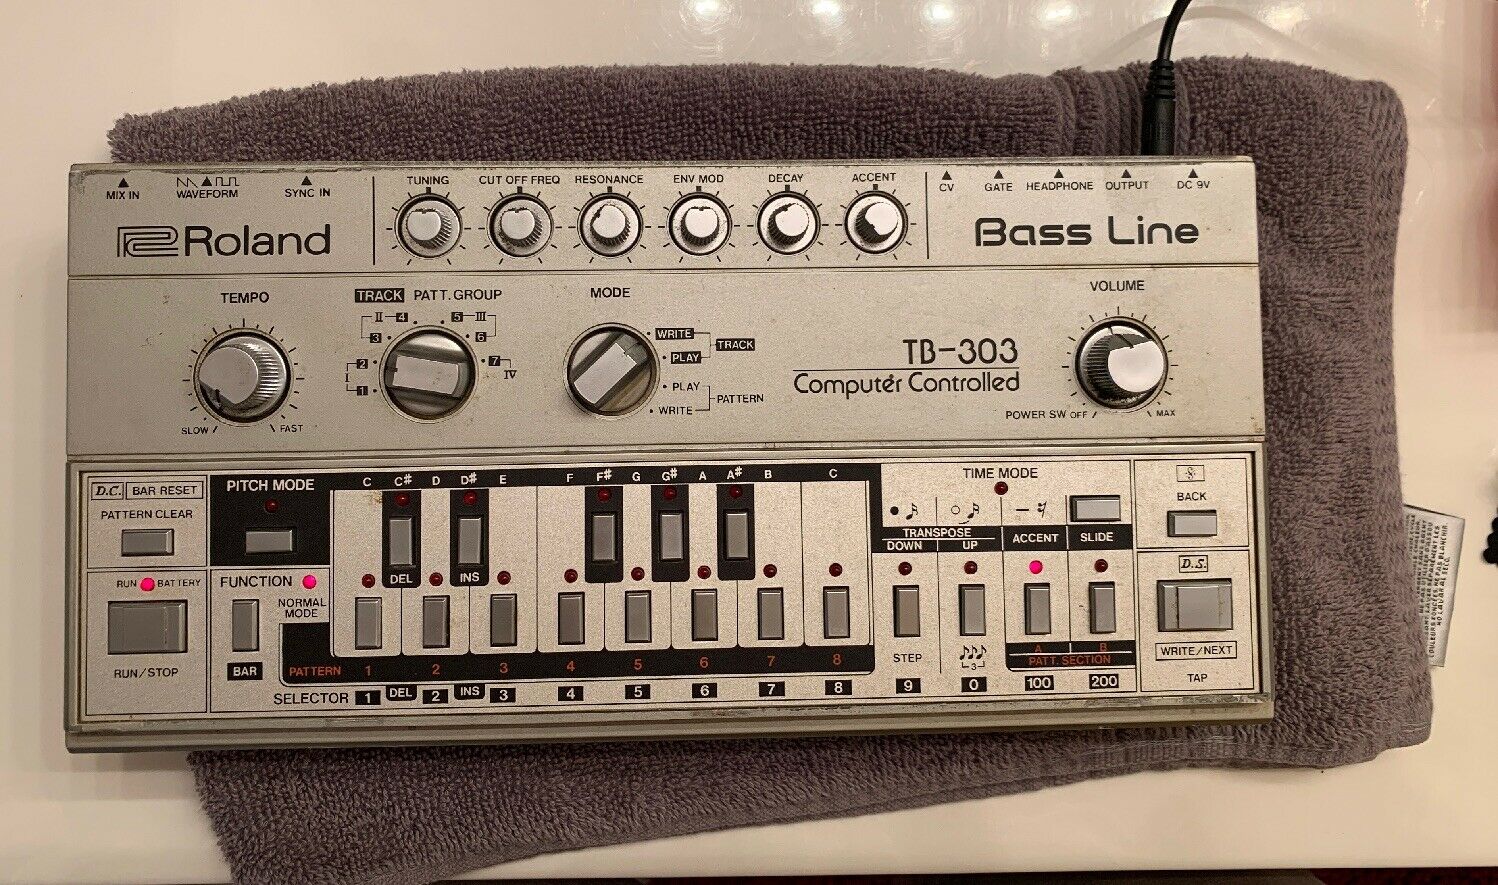 Bass line ru. Roland TB-303. Roland Bass Synth. Roland tr 303 Bass line. Bassline Analog Synth.